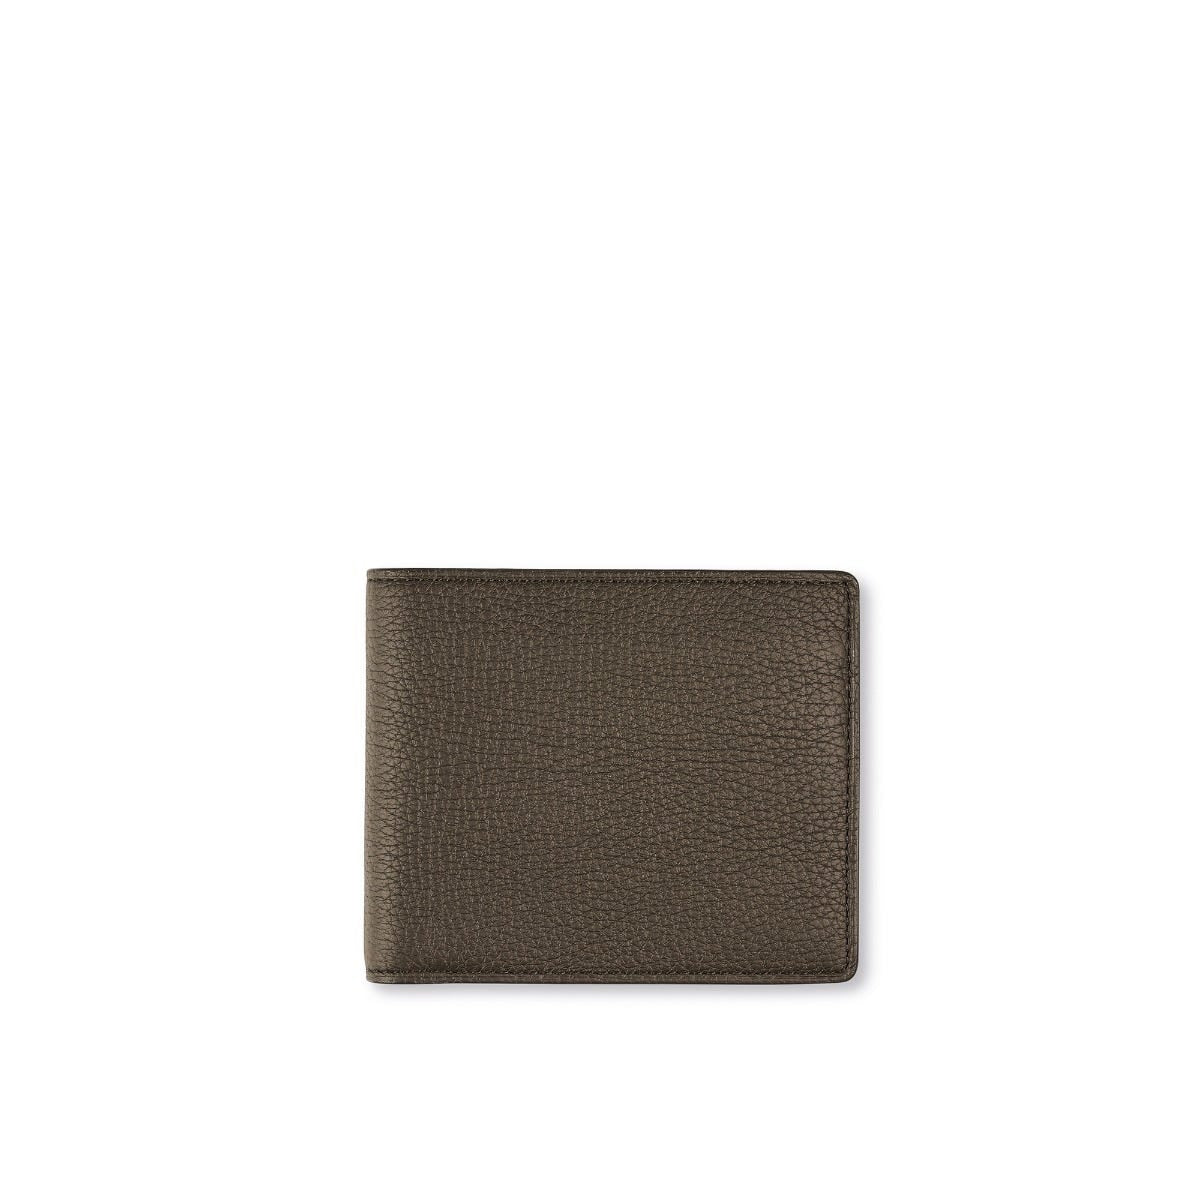 GMT 6cc Billfold Wallet in Soft Grain Leather